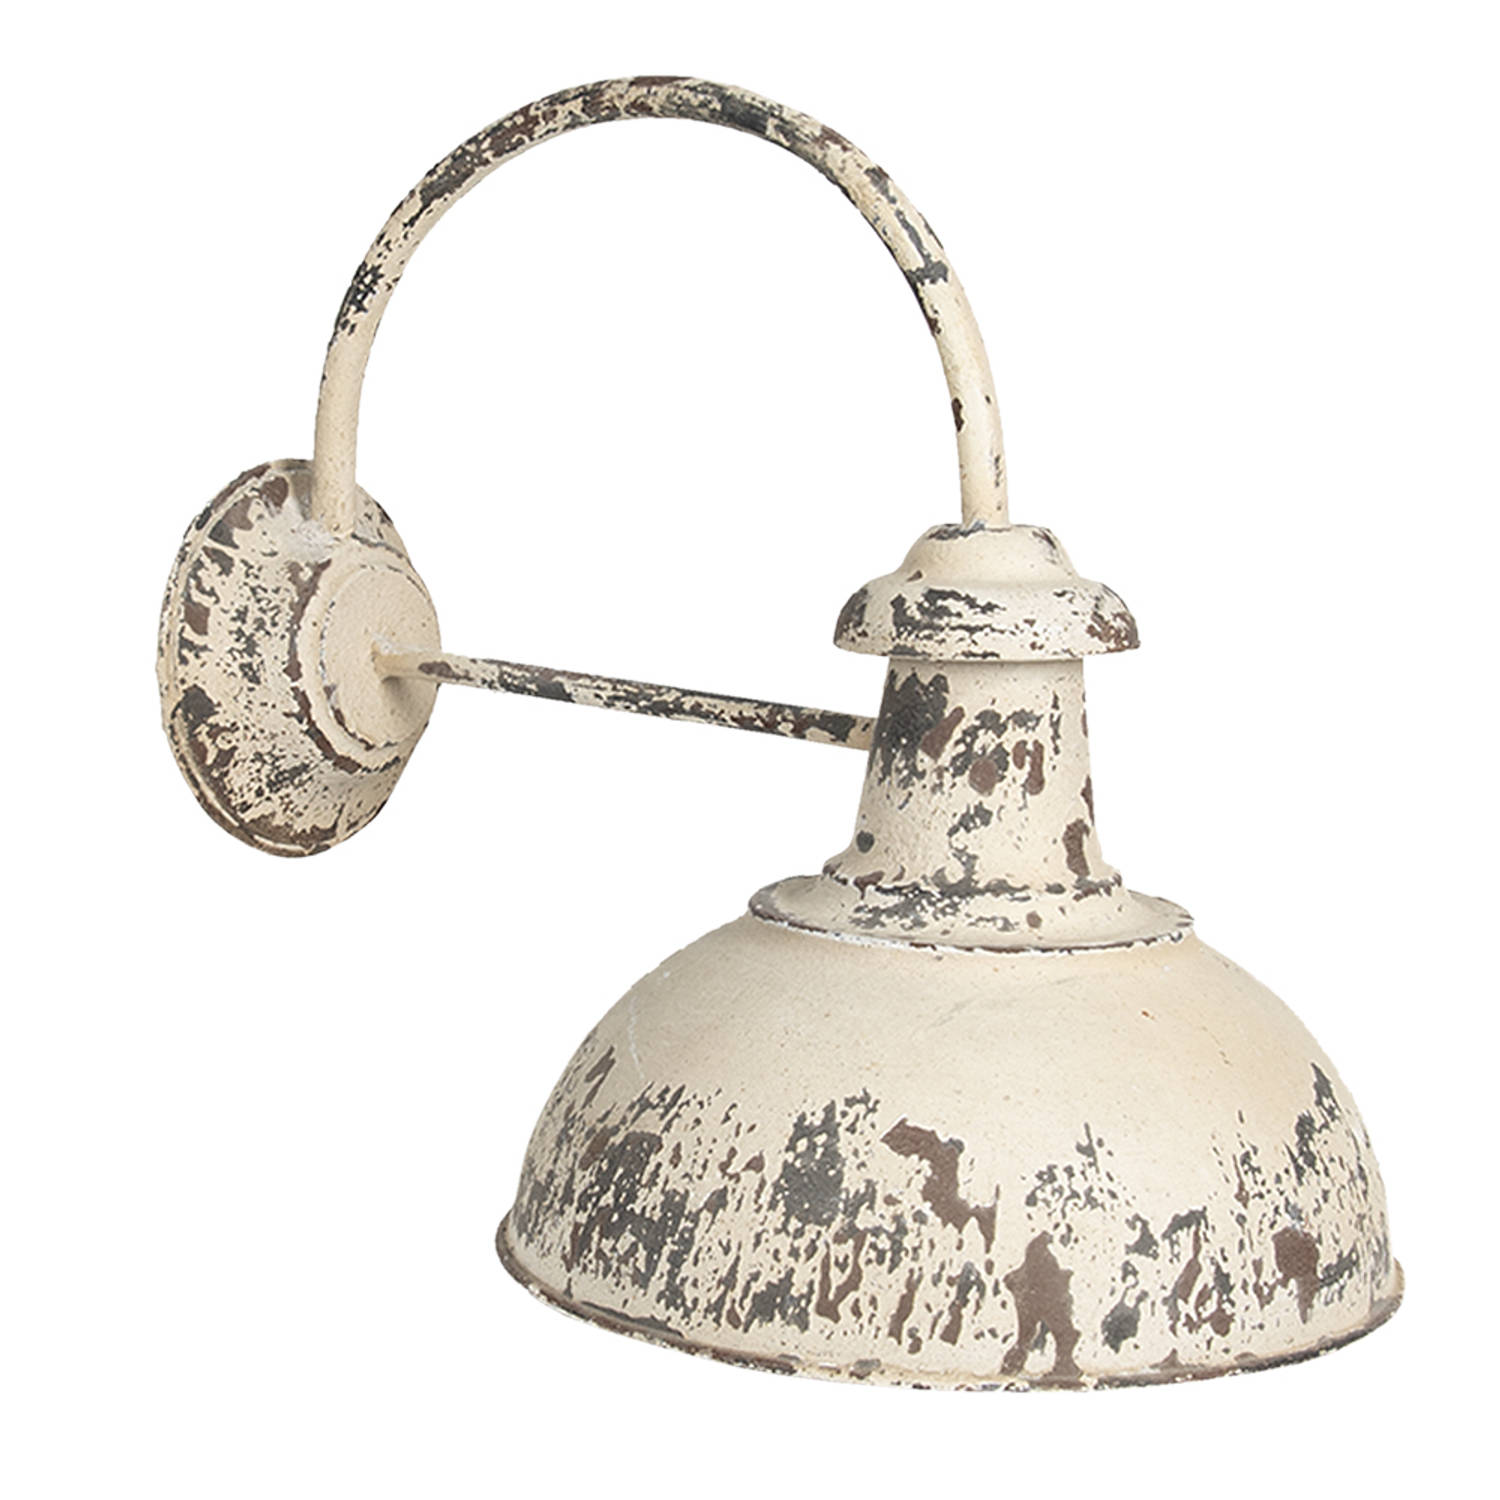 HAES DECO - Wandlamp - Industrial - Vintage / Retro Lamp, formaat 47x30x40 cm - Wit Metaal - Ronde Muurlamp, Sfeerlamp